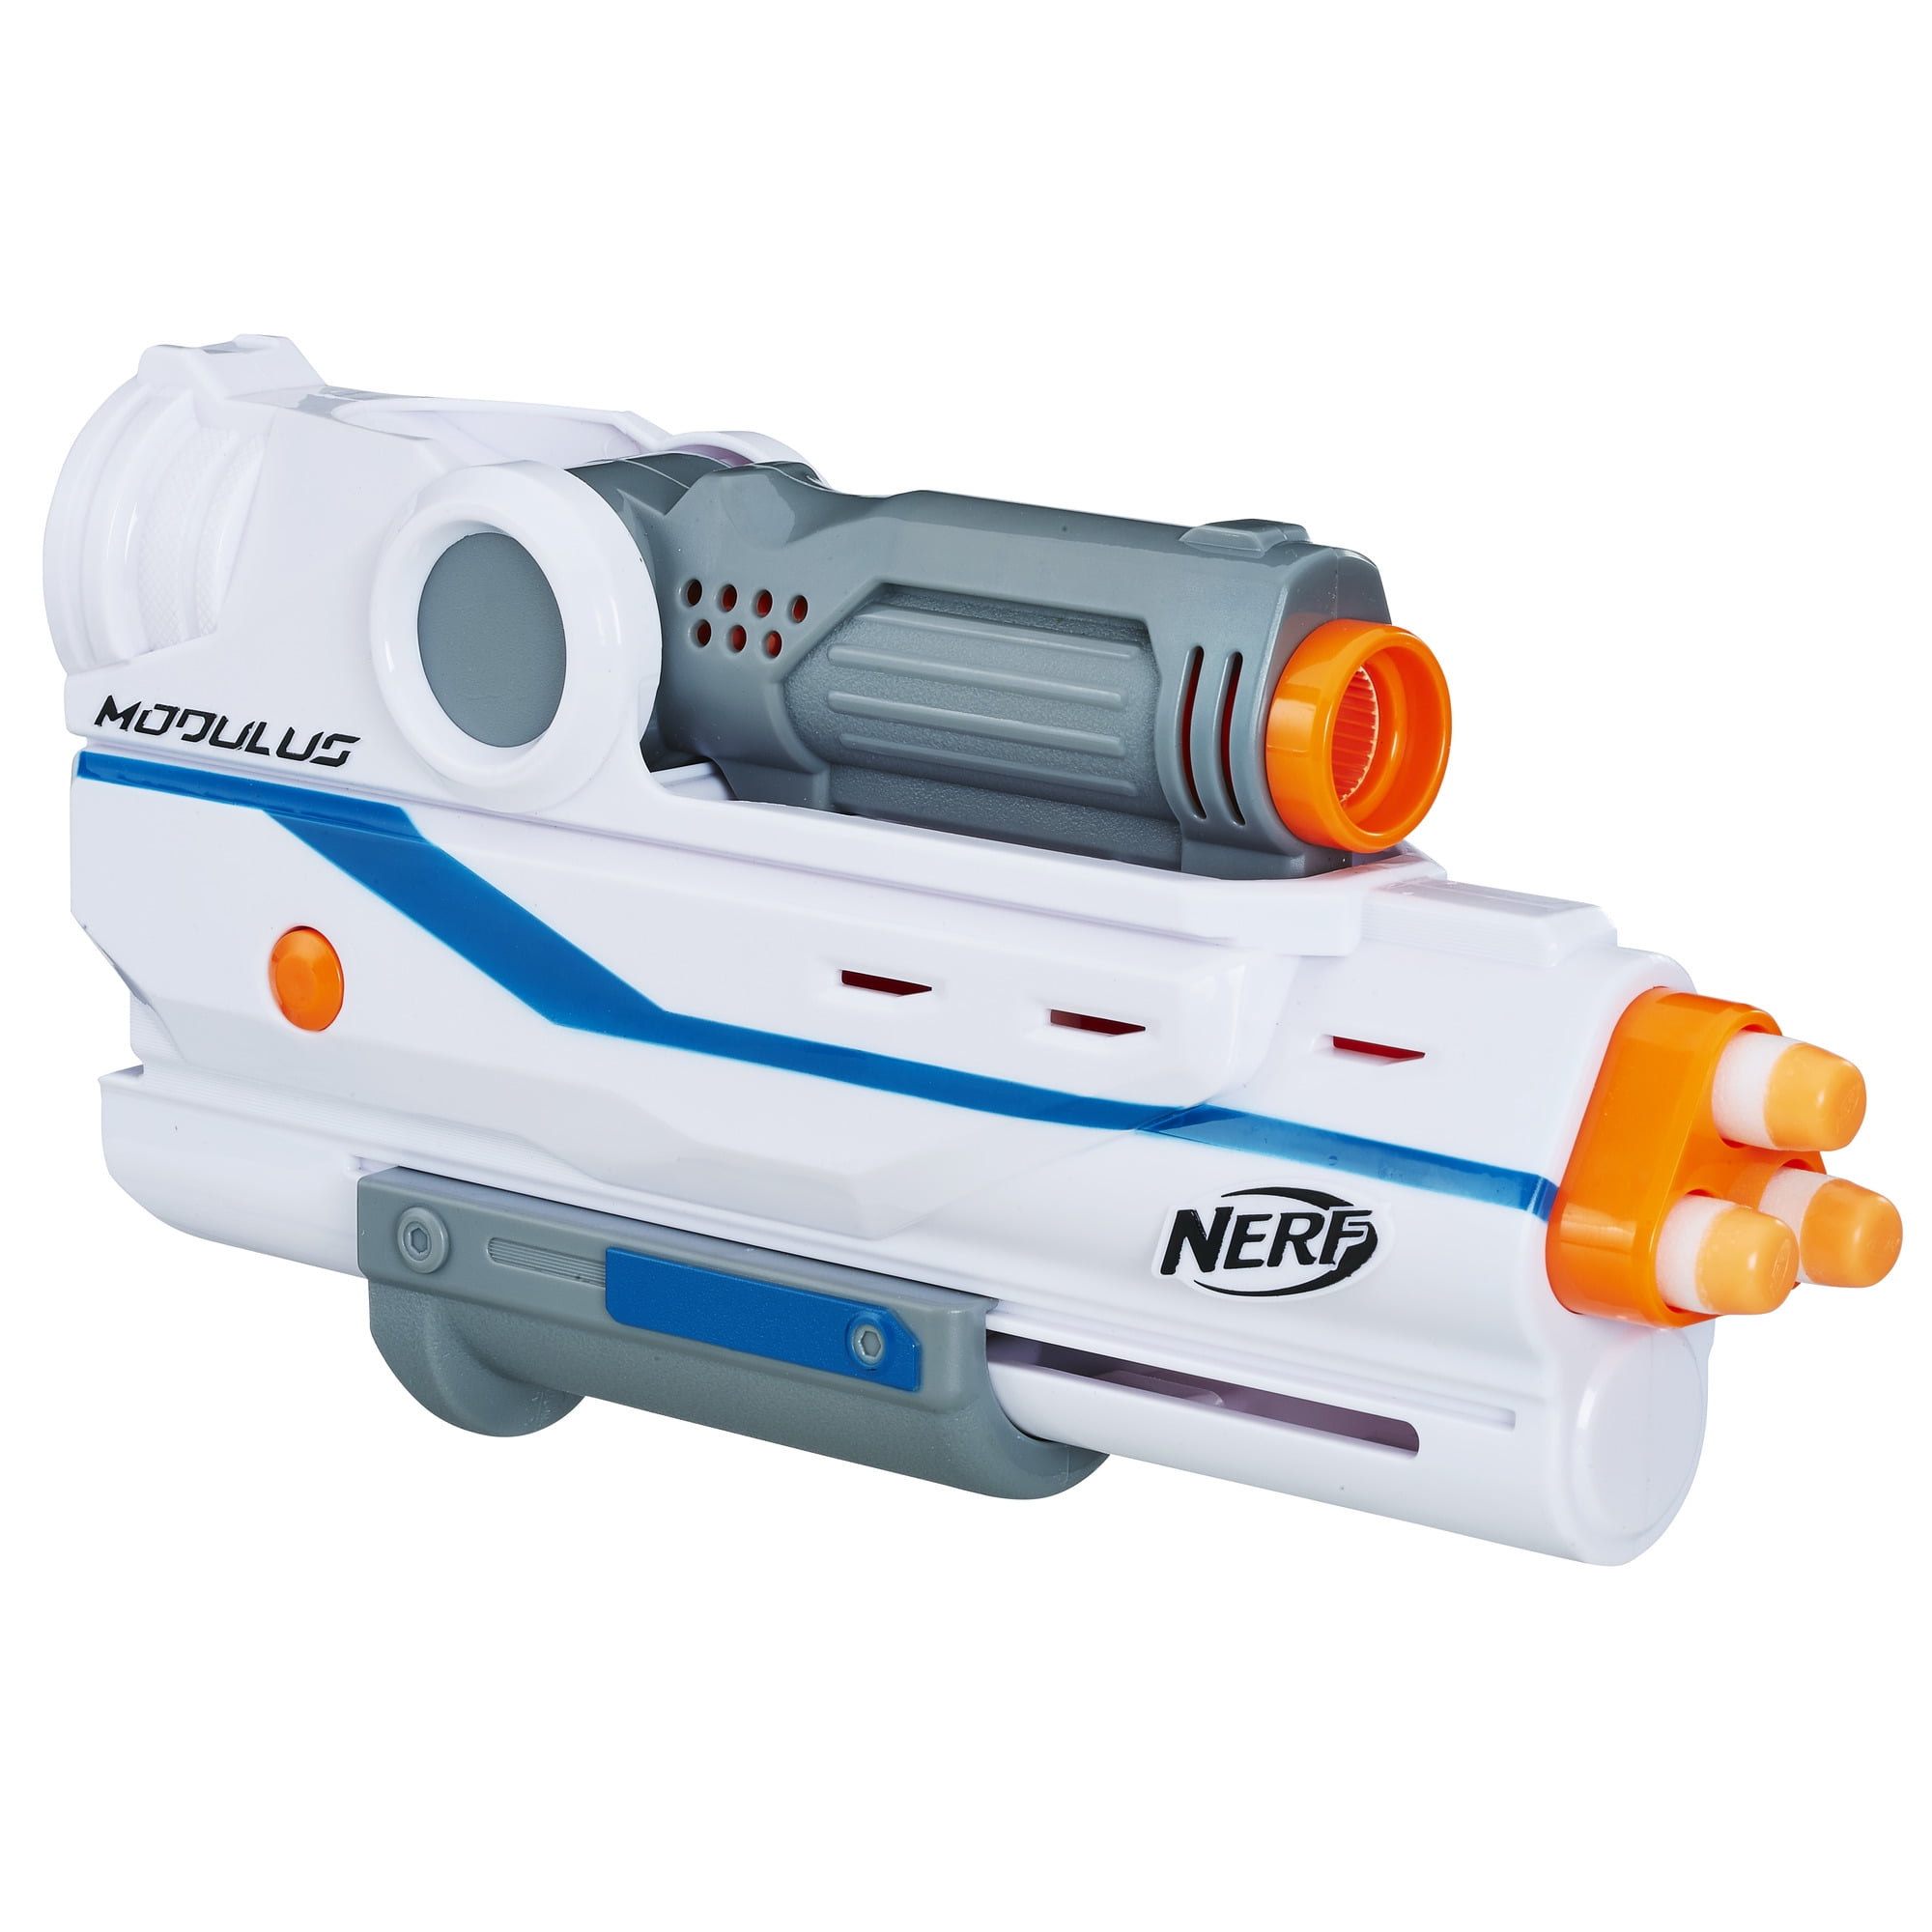 NEW Nerf Modulus Blaster Gun Accessories Day/Night Zoom Scope Free Shipping 